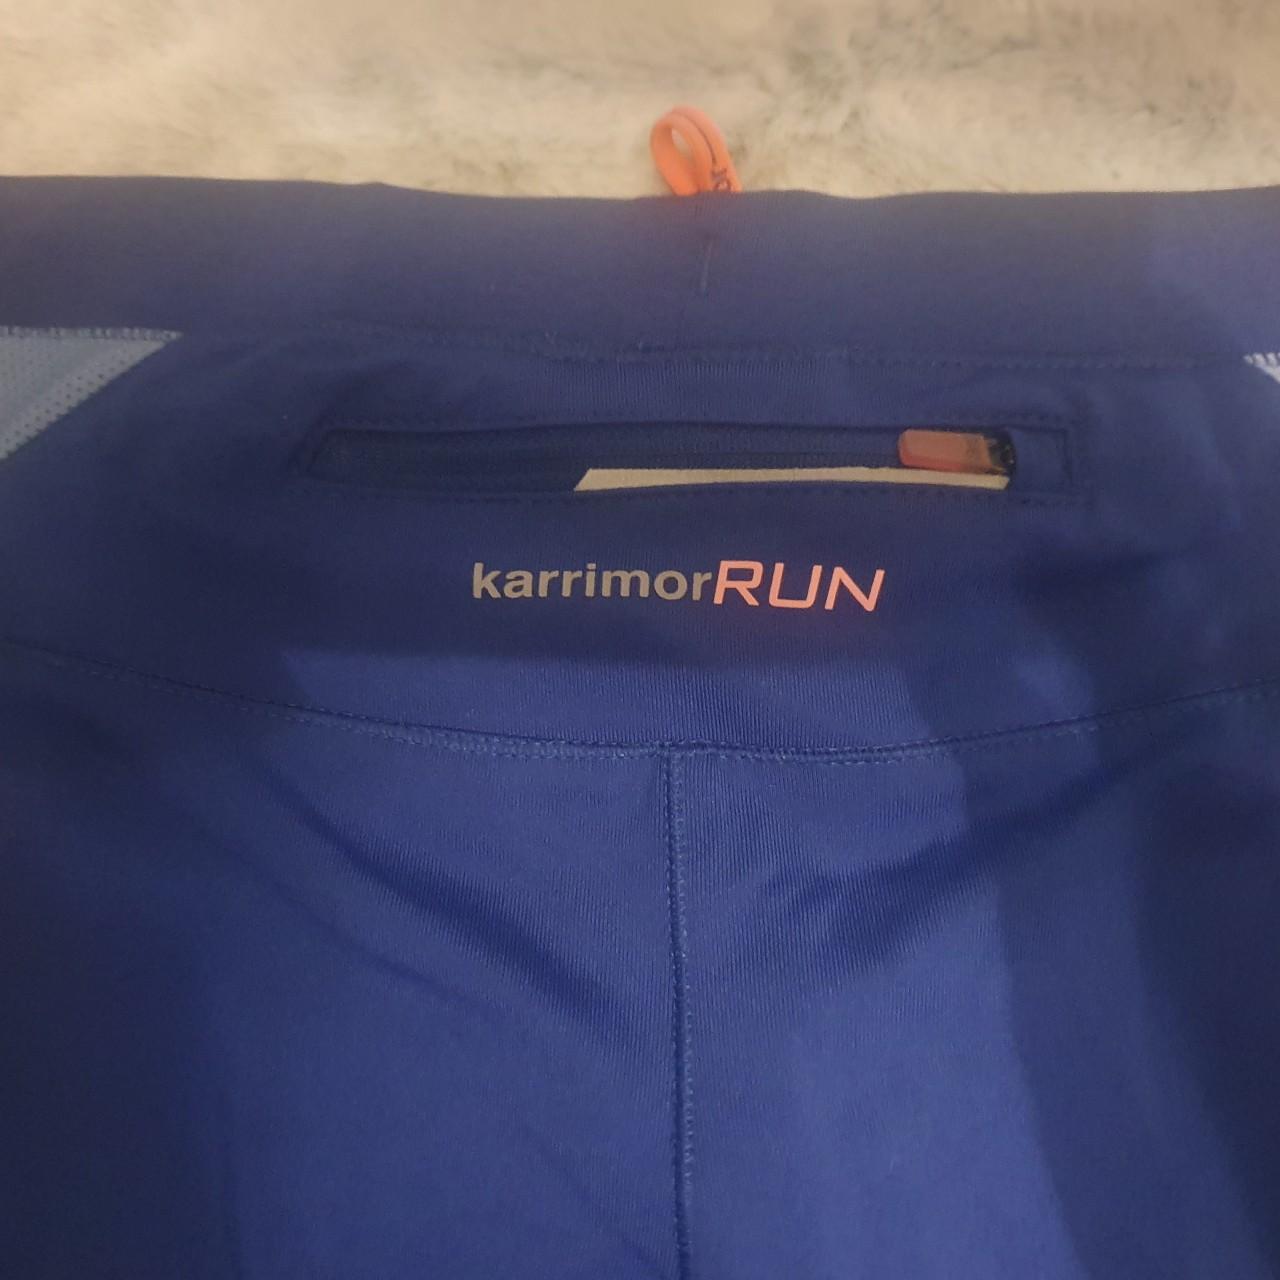 Karrimor run Xlite running / gym leggings, has a - Depop